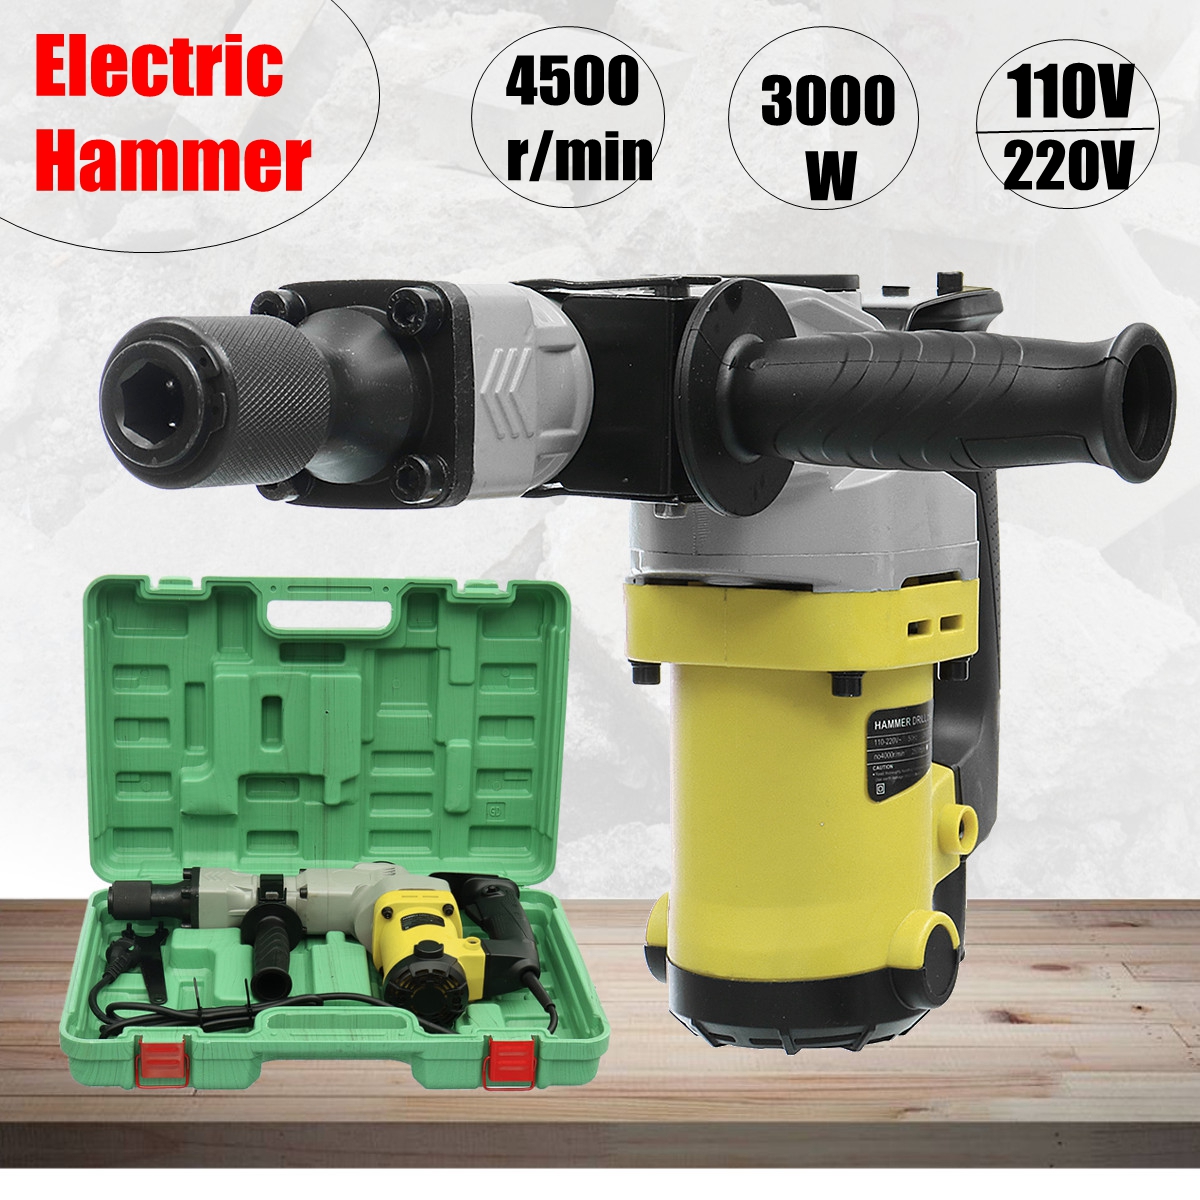 3000W-3000BPM-4500RMin-Electric-Hammer-Demolition-Hammers-Jackhammer-Concrete-Breaker-With-Case-1300390-1